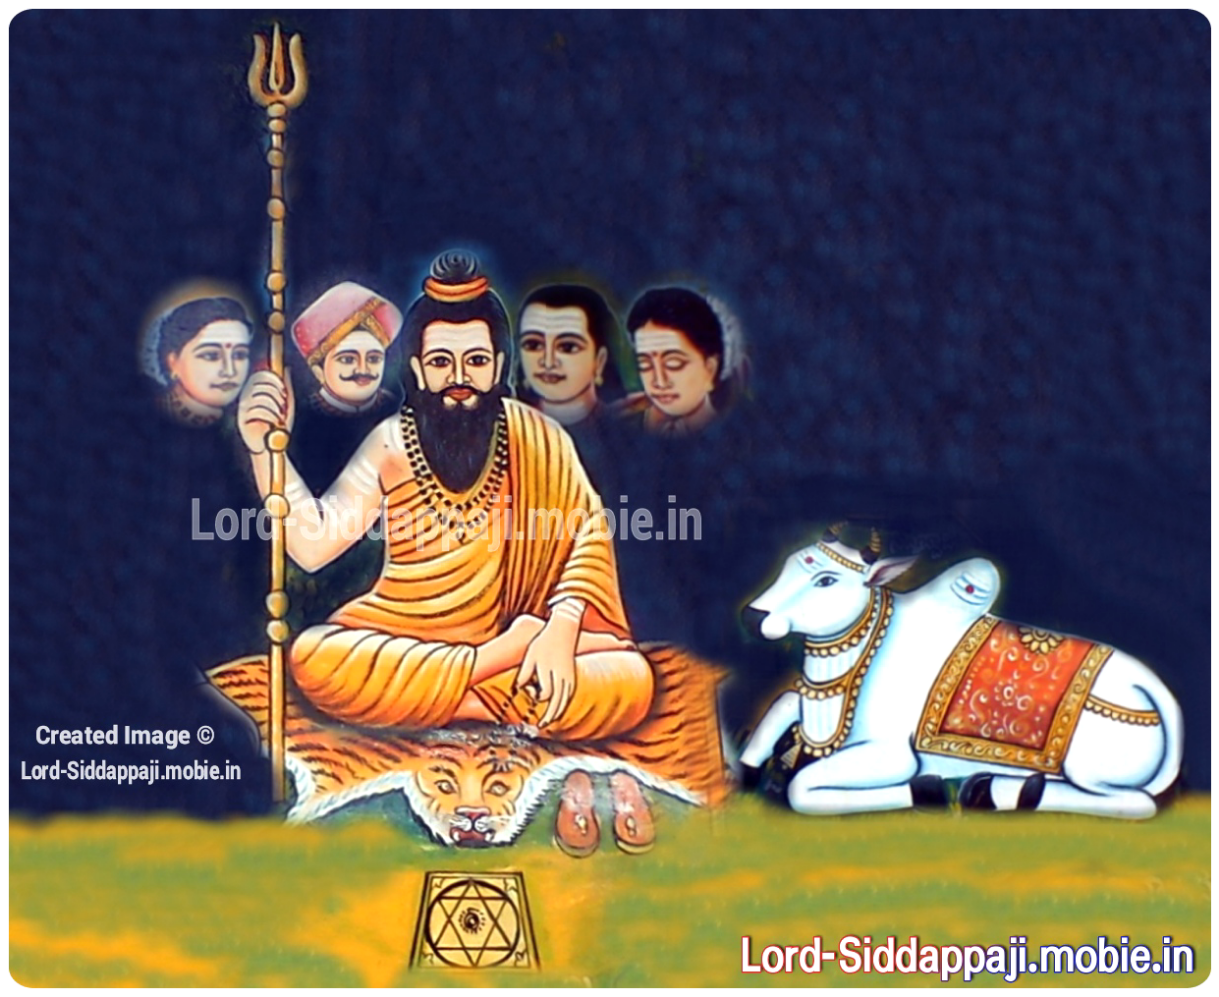 Siddappaji.com Copyrights